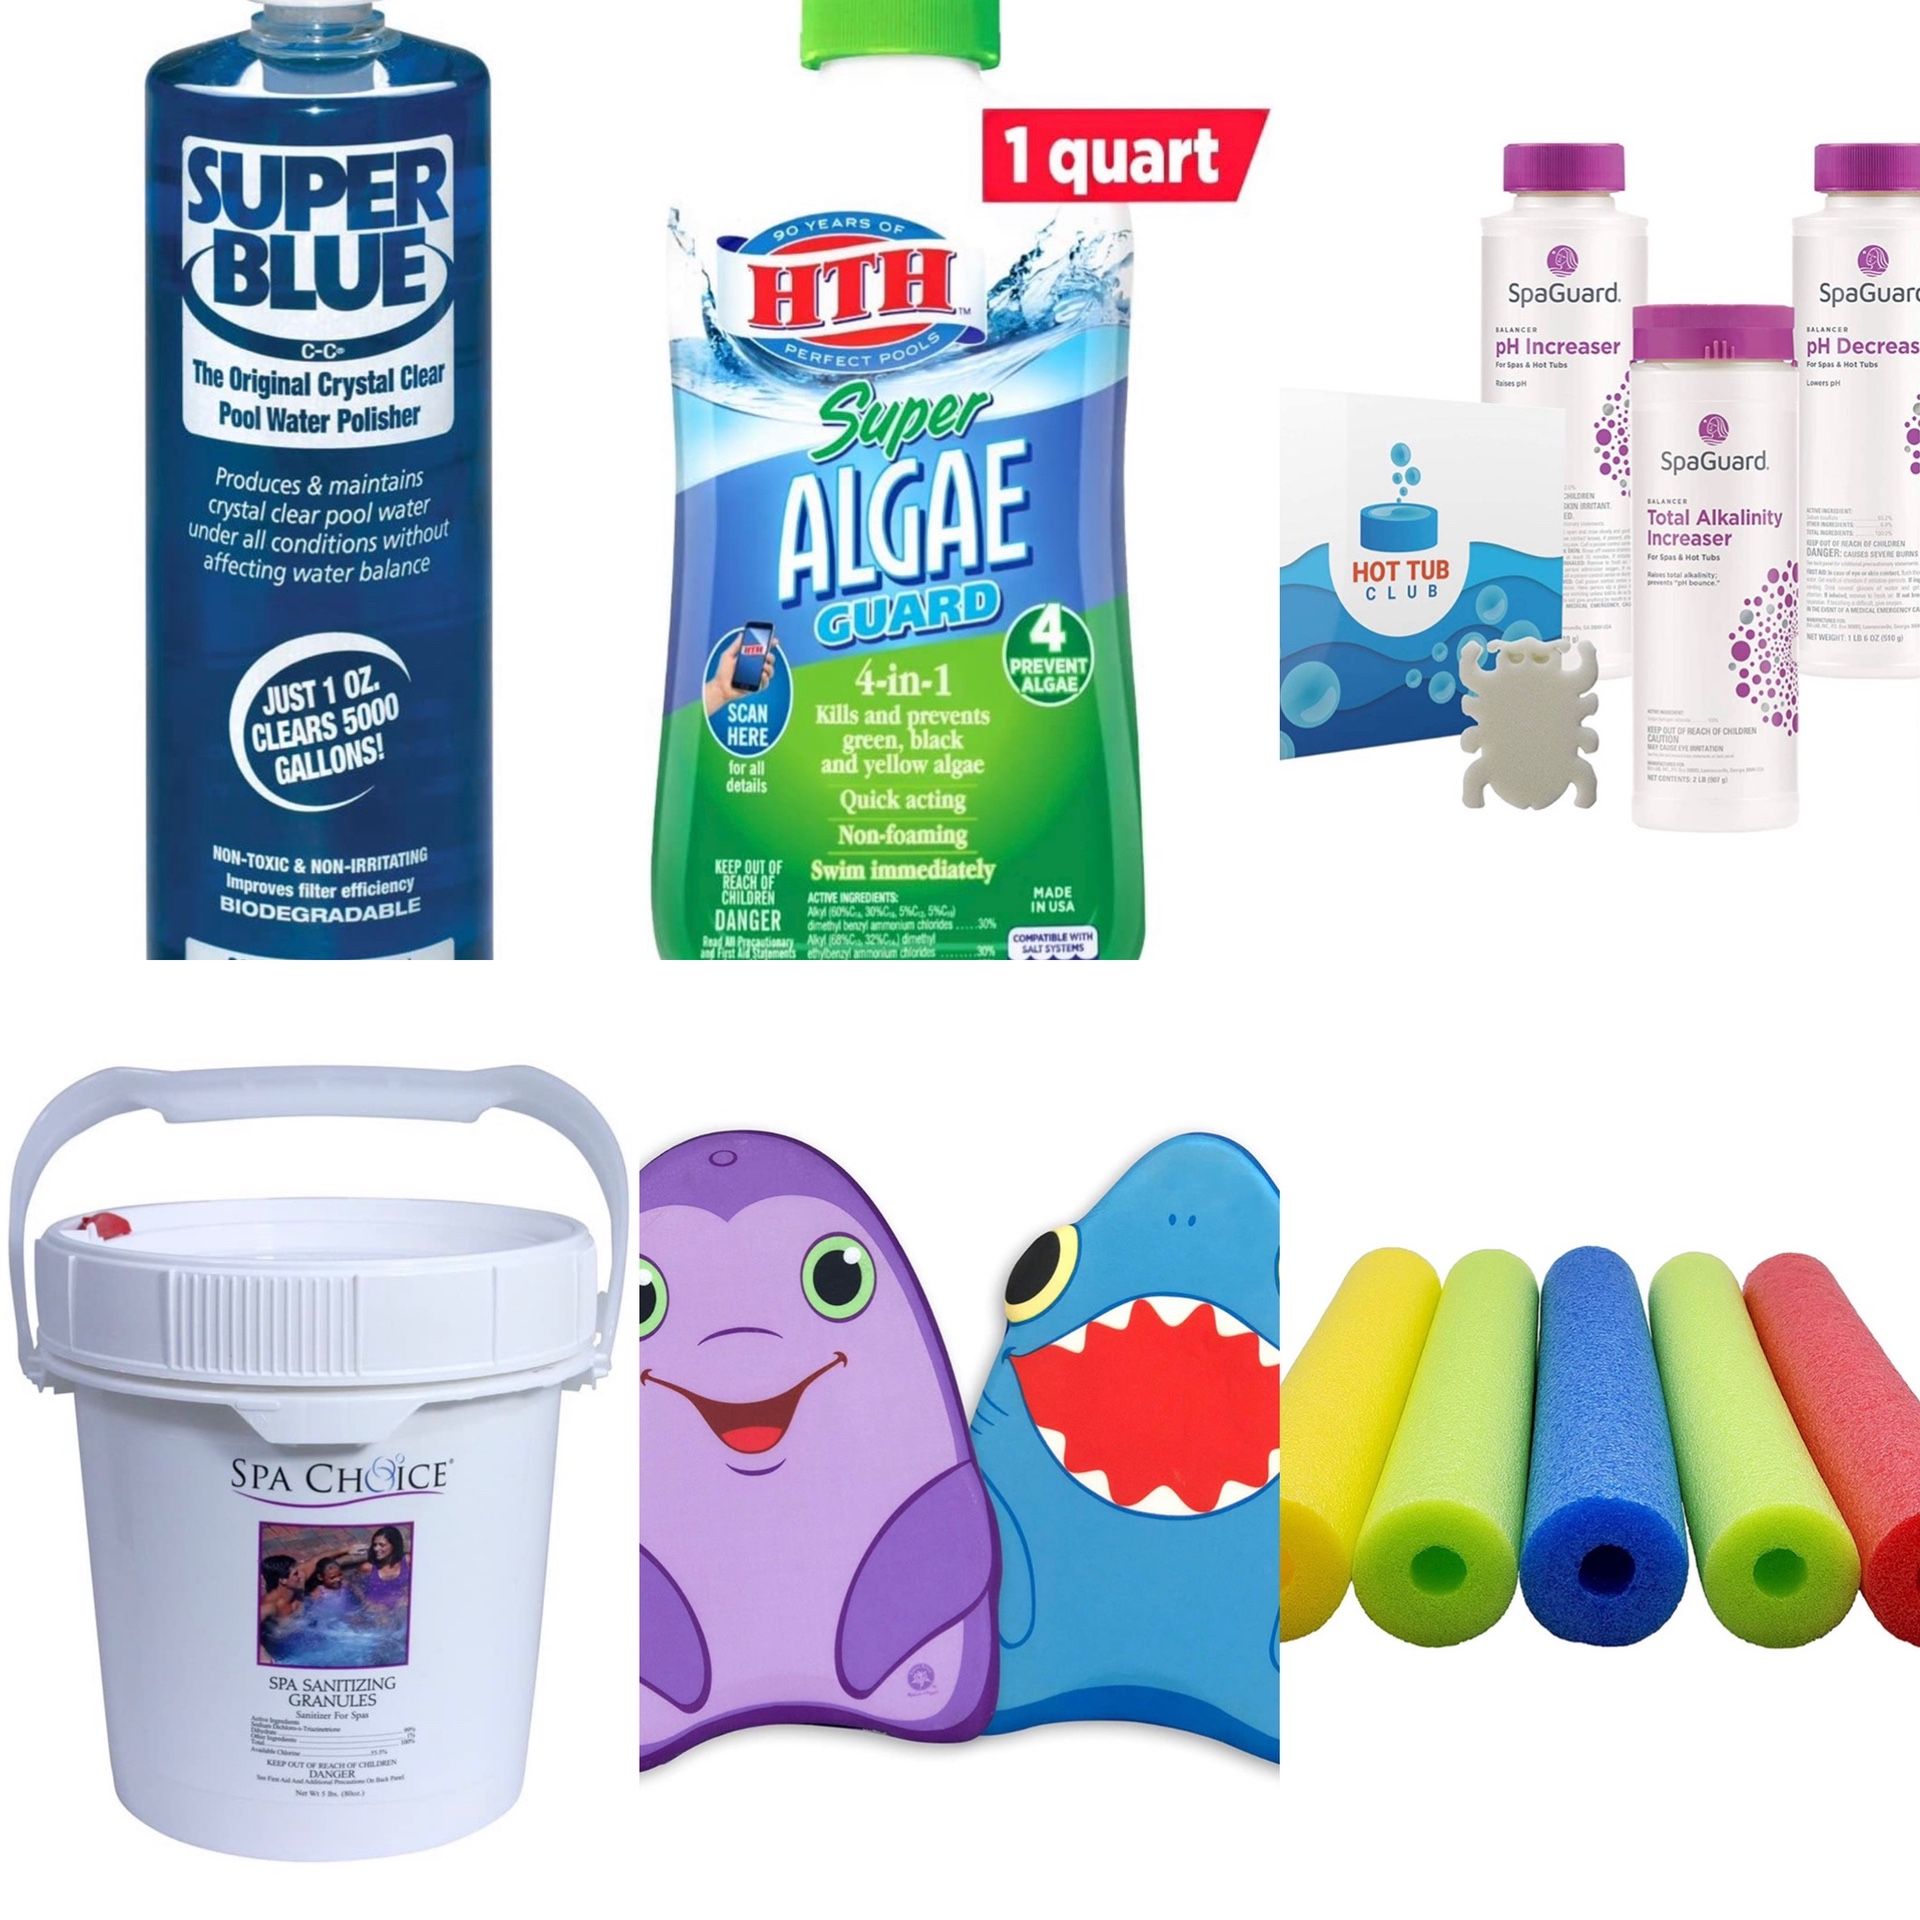 Pool chemicals and pool toys (chlorine, increase, decrease, algecide)